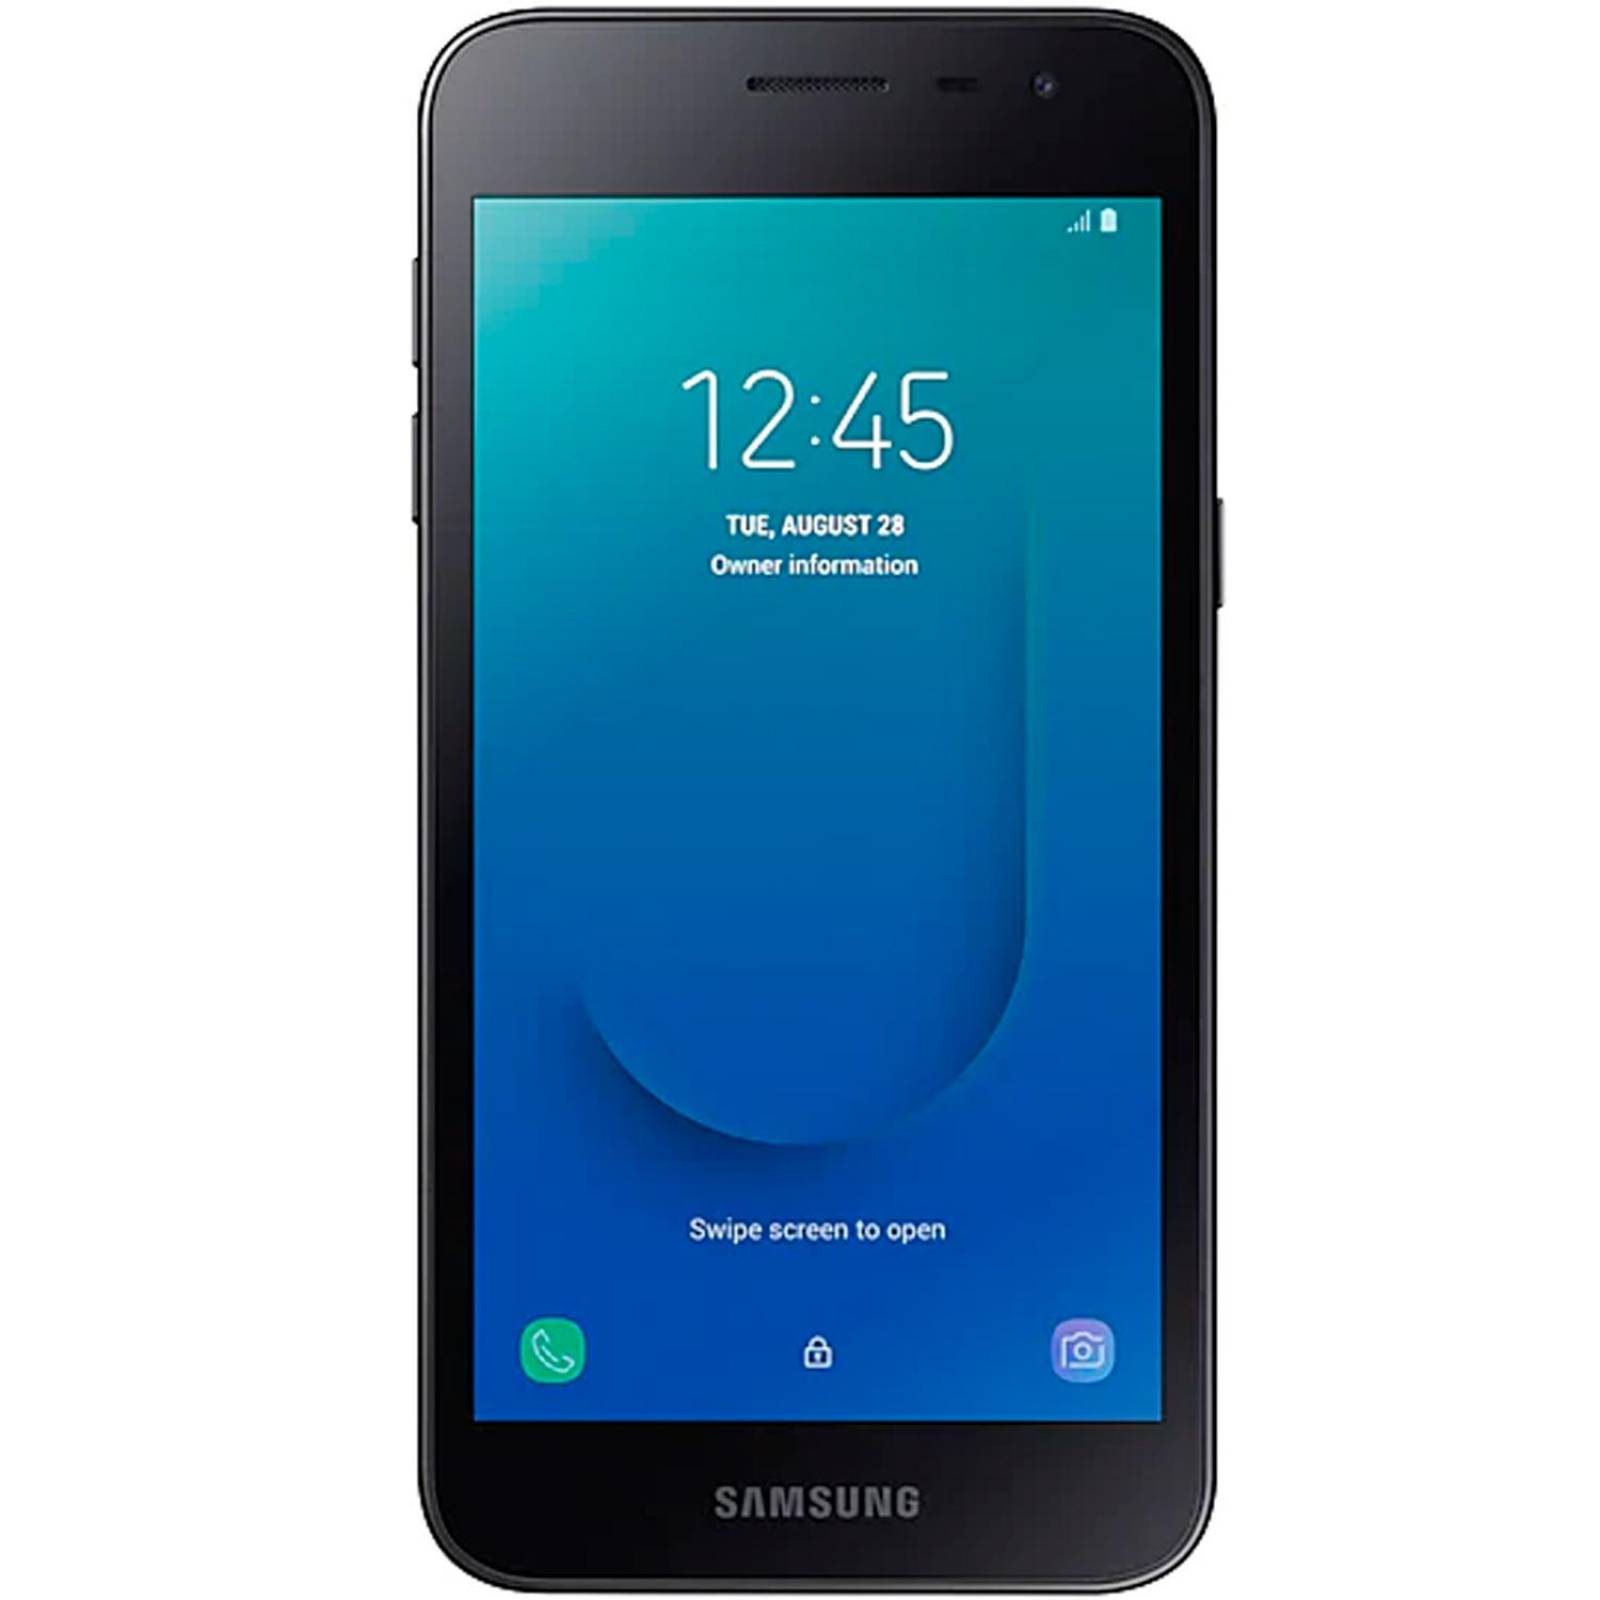 Celular SAMSUNG Galaxy J2 1GB 8GB Quad Core Android 5.1.1 Negro 